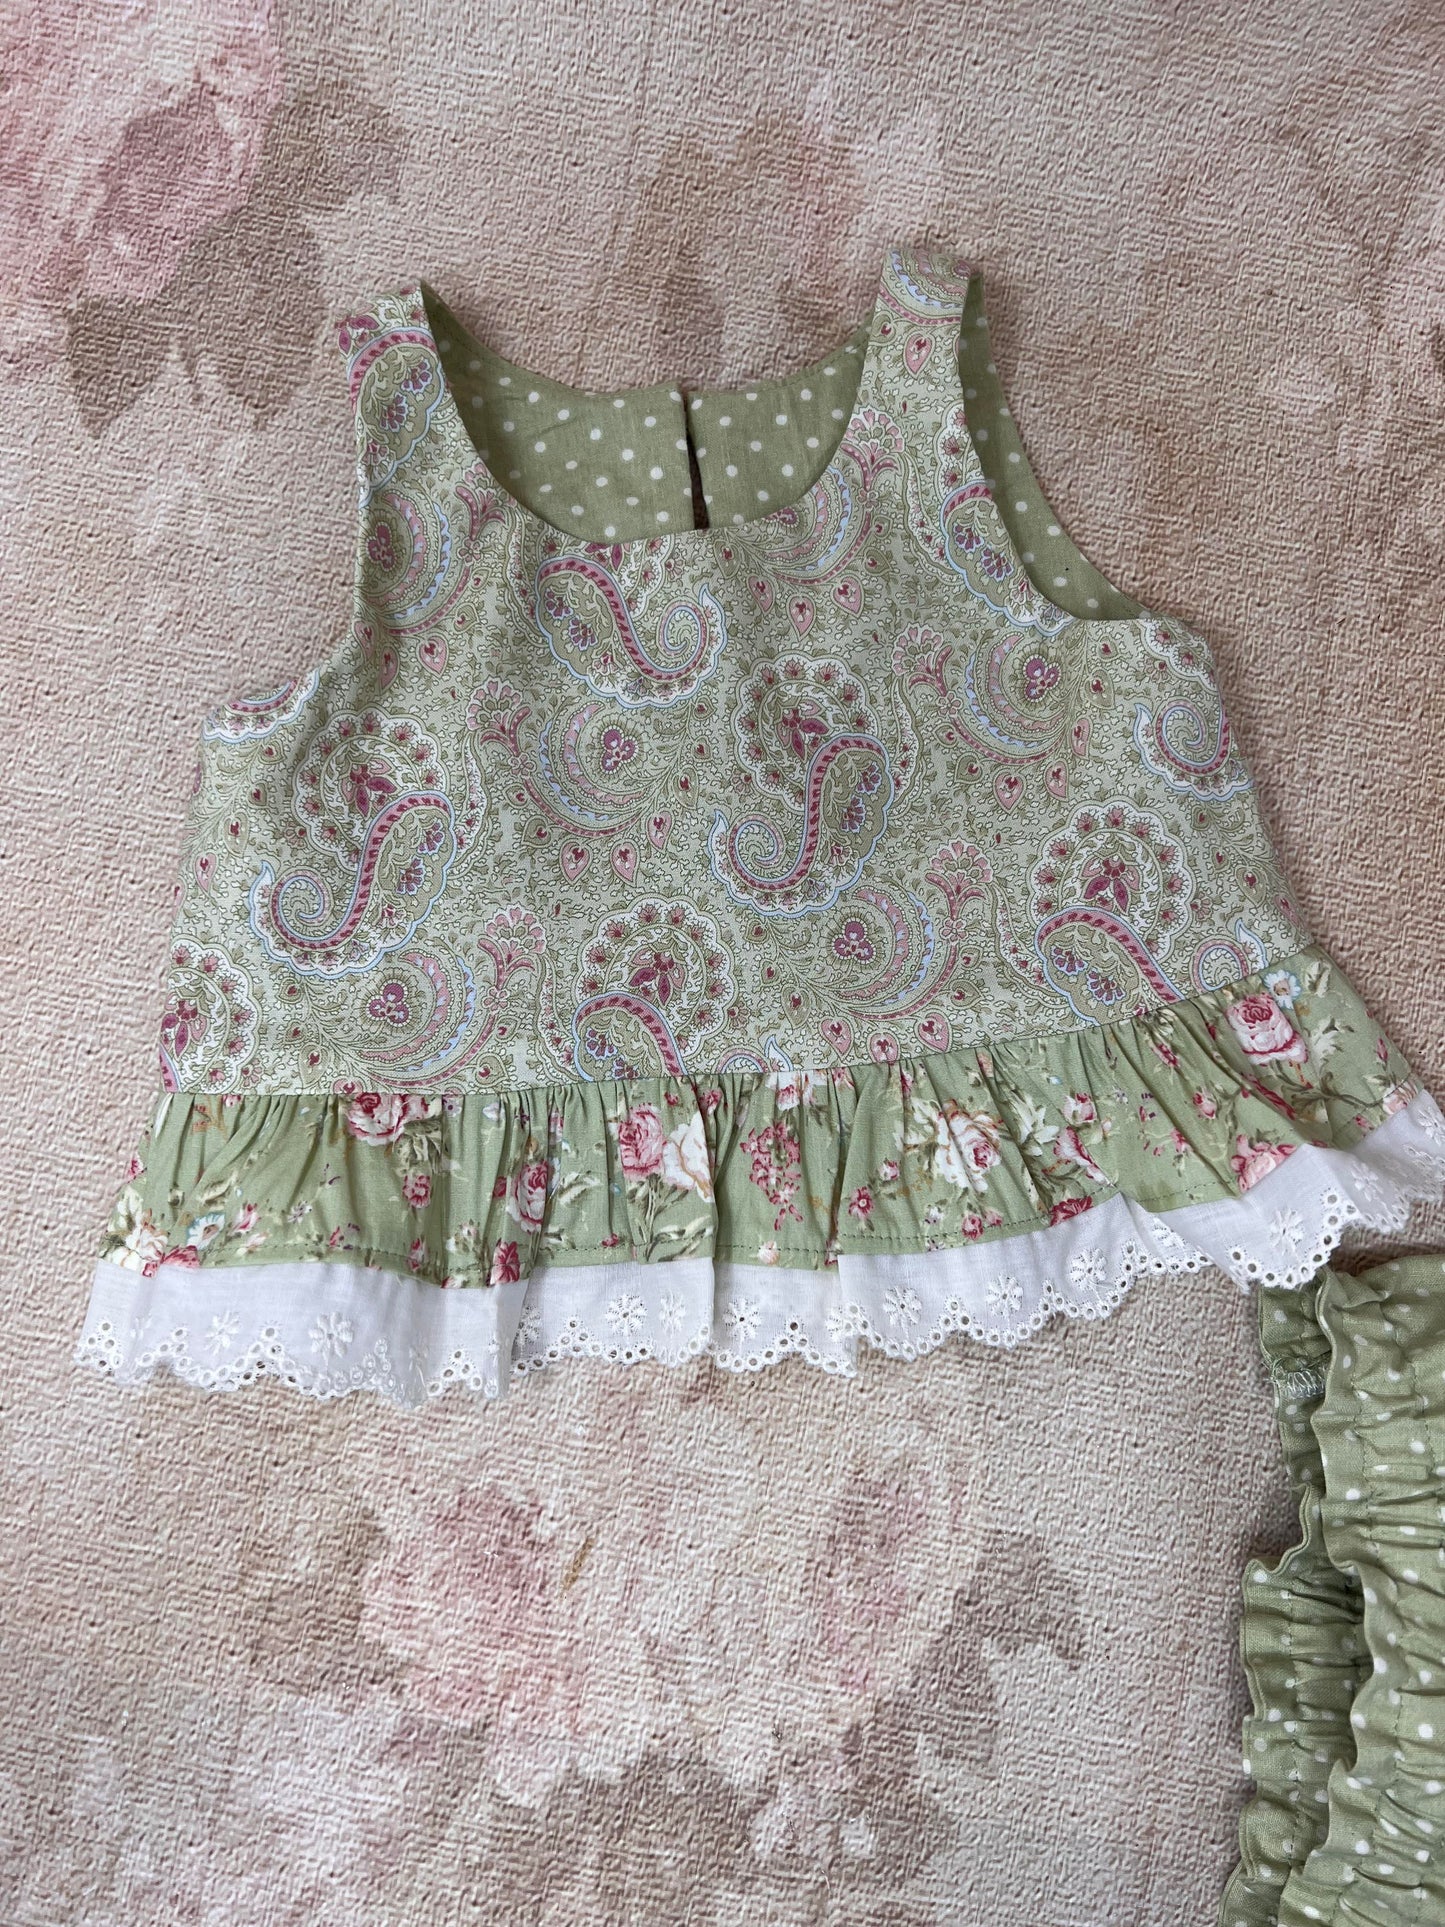 Toddler 9-12 mo Ruffled top and bloomers pretty green paisley and polka dot fabric. Free Shipping.